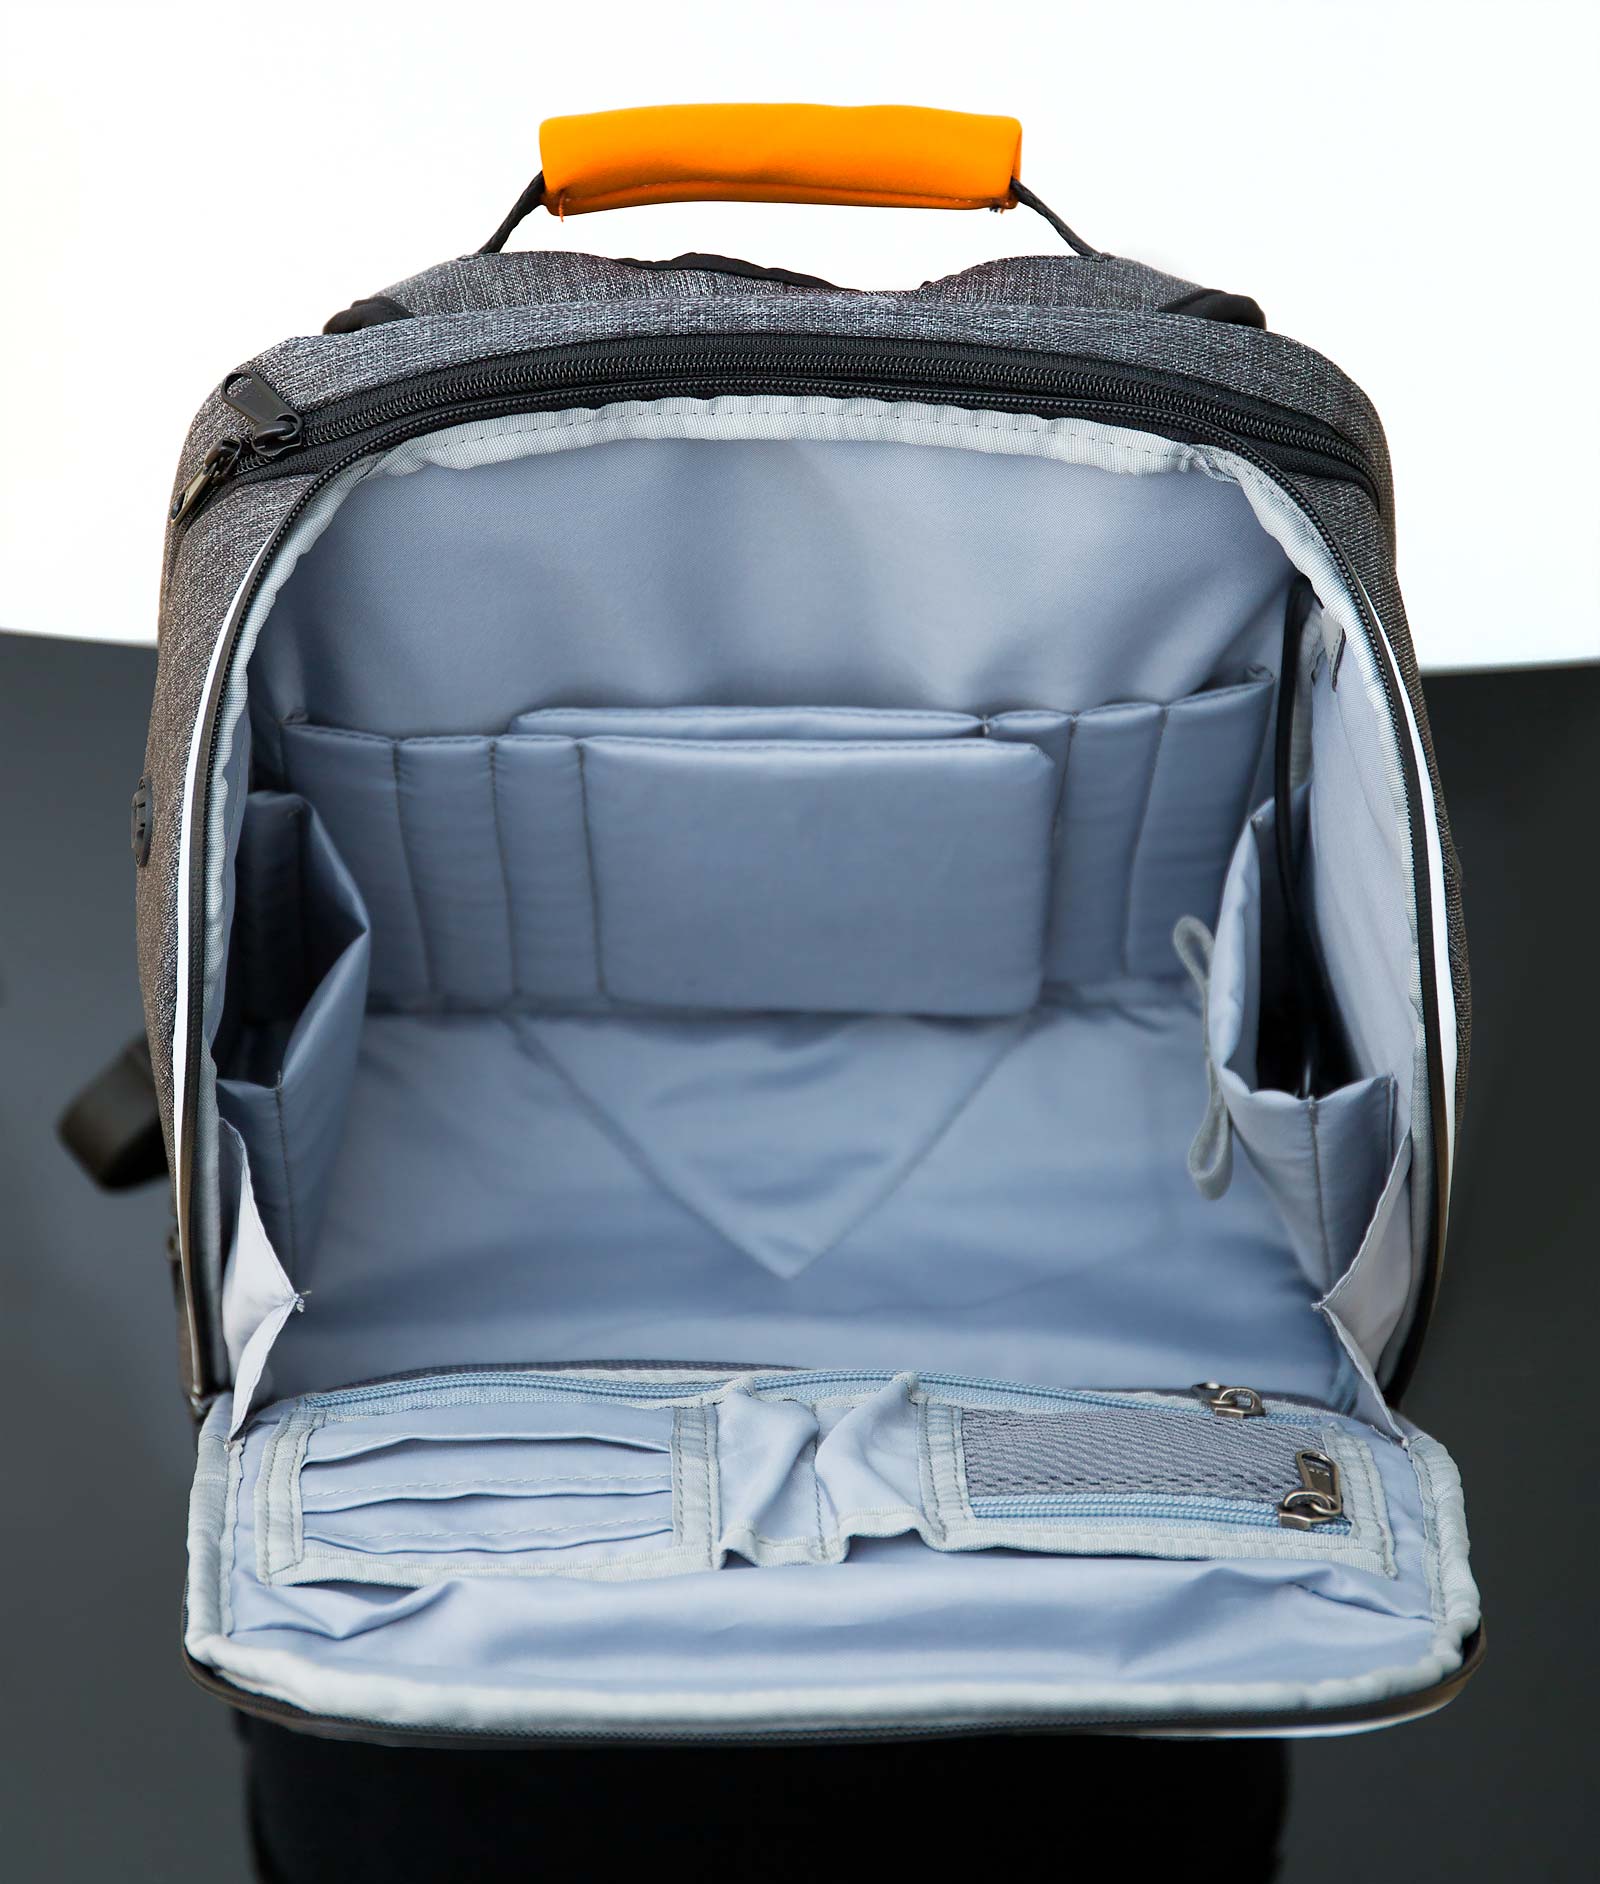 udee-backpack-upper-interior – Light And Matter